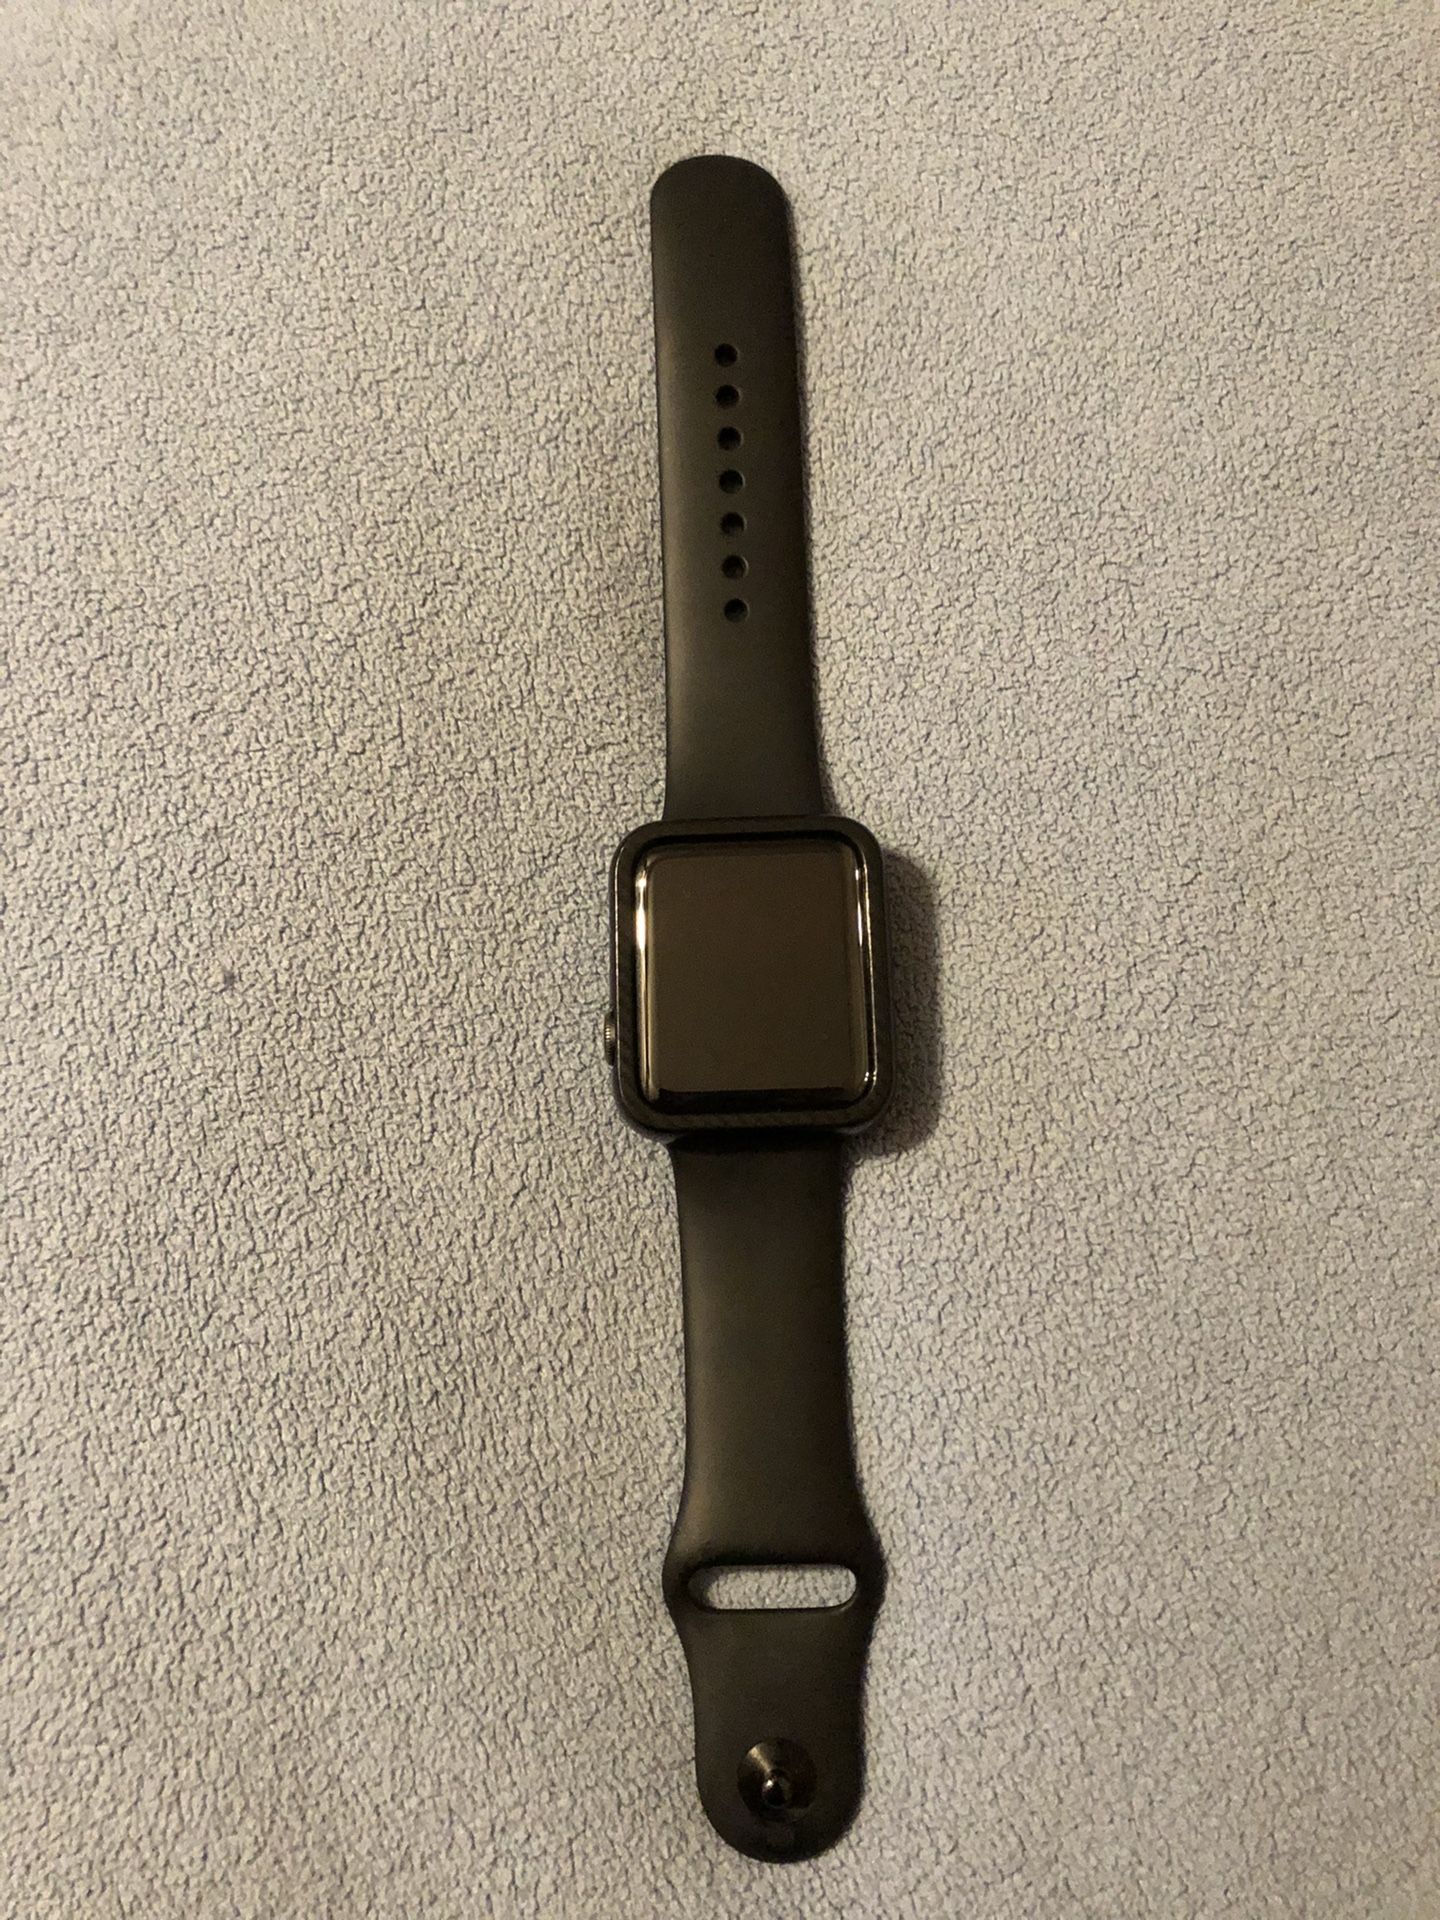 Apple Watch SERIES 2